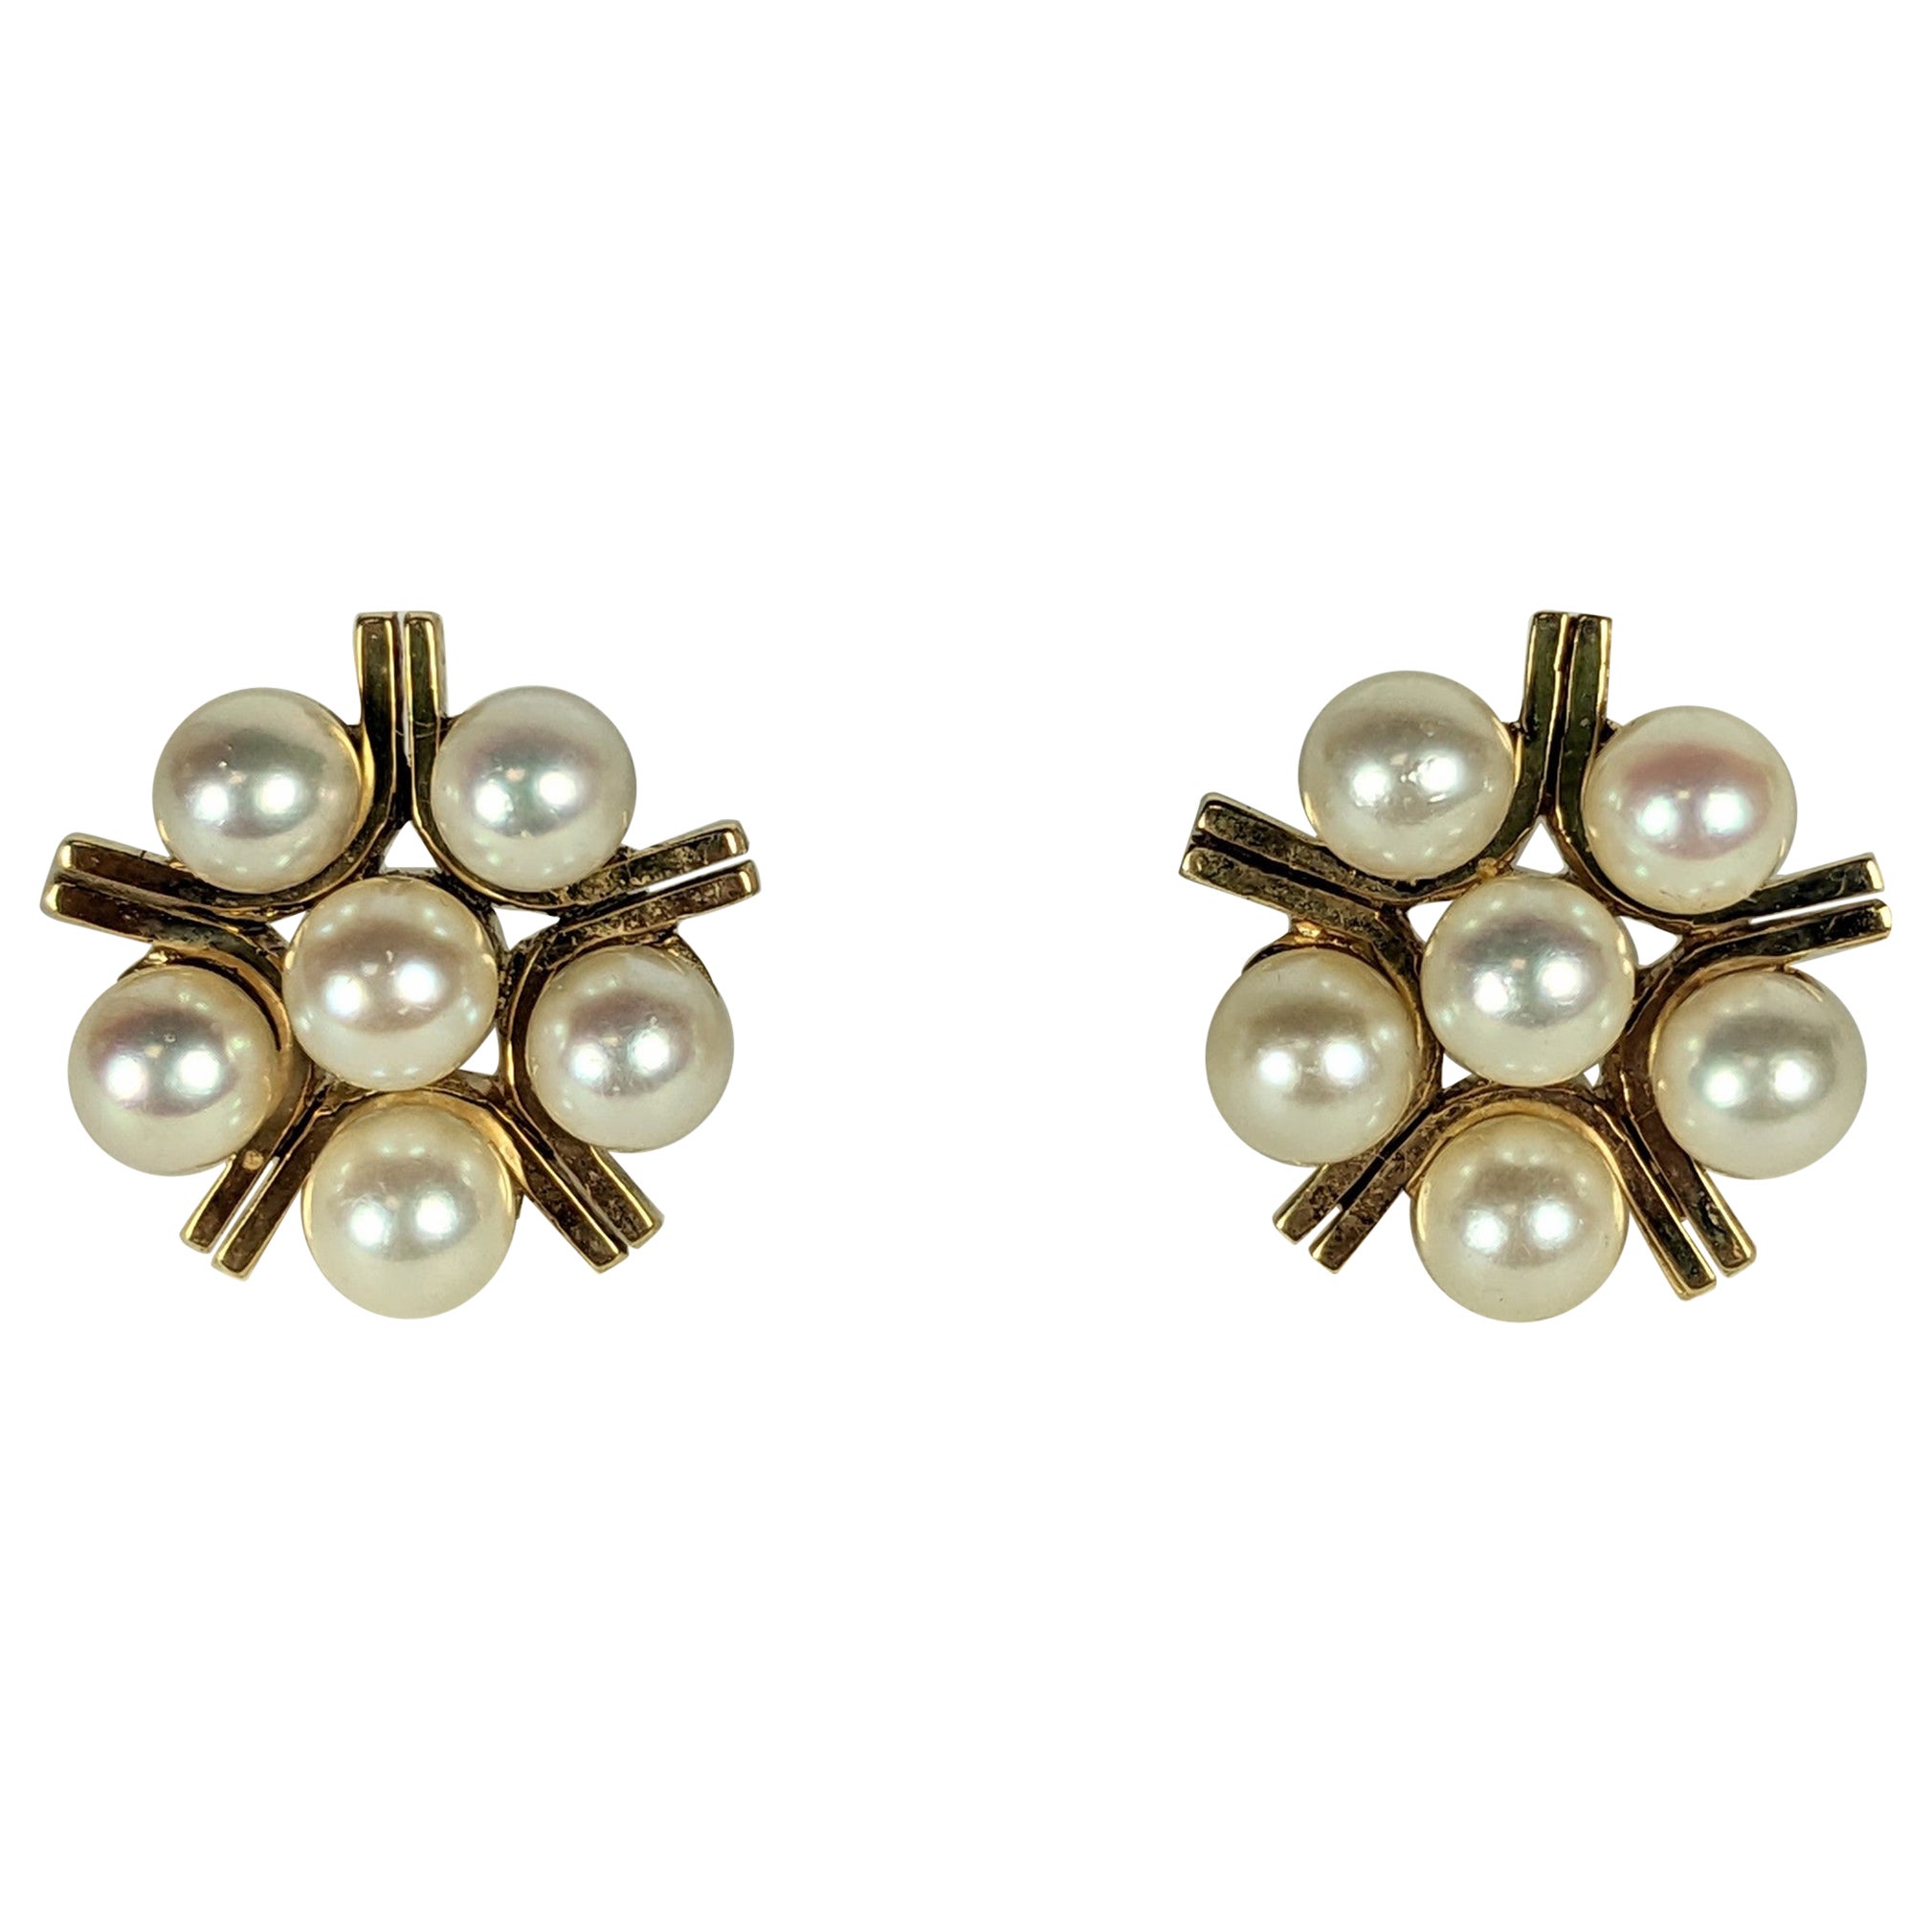 Cultured Pearl Star Form Earrings